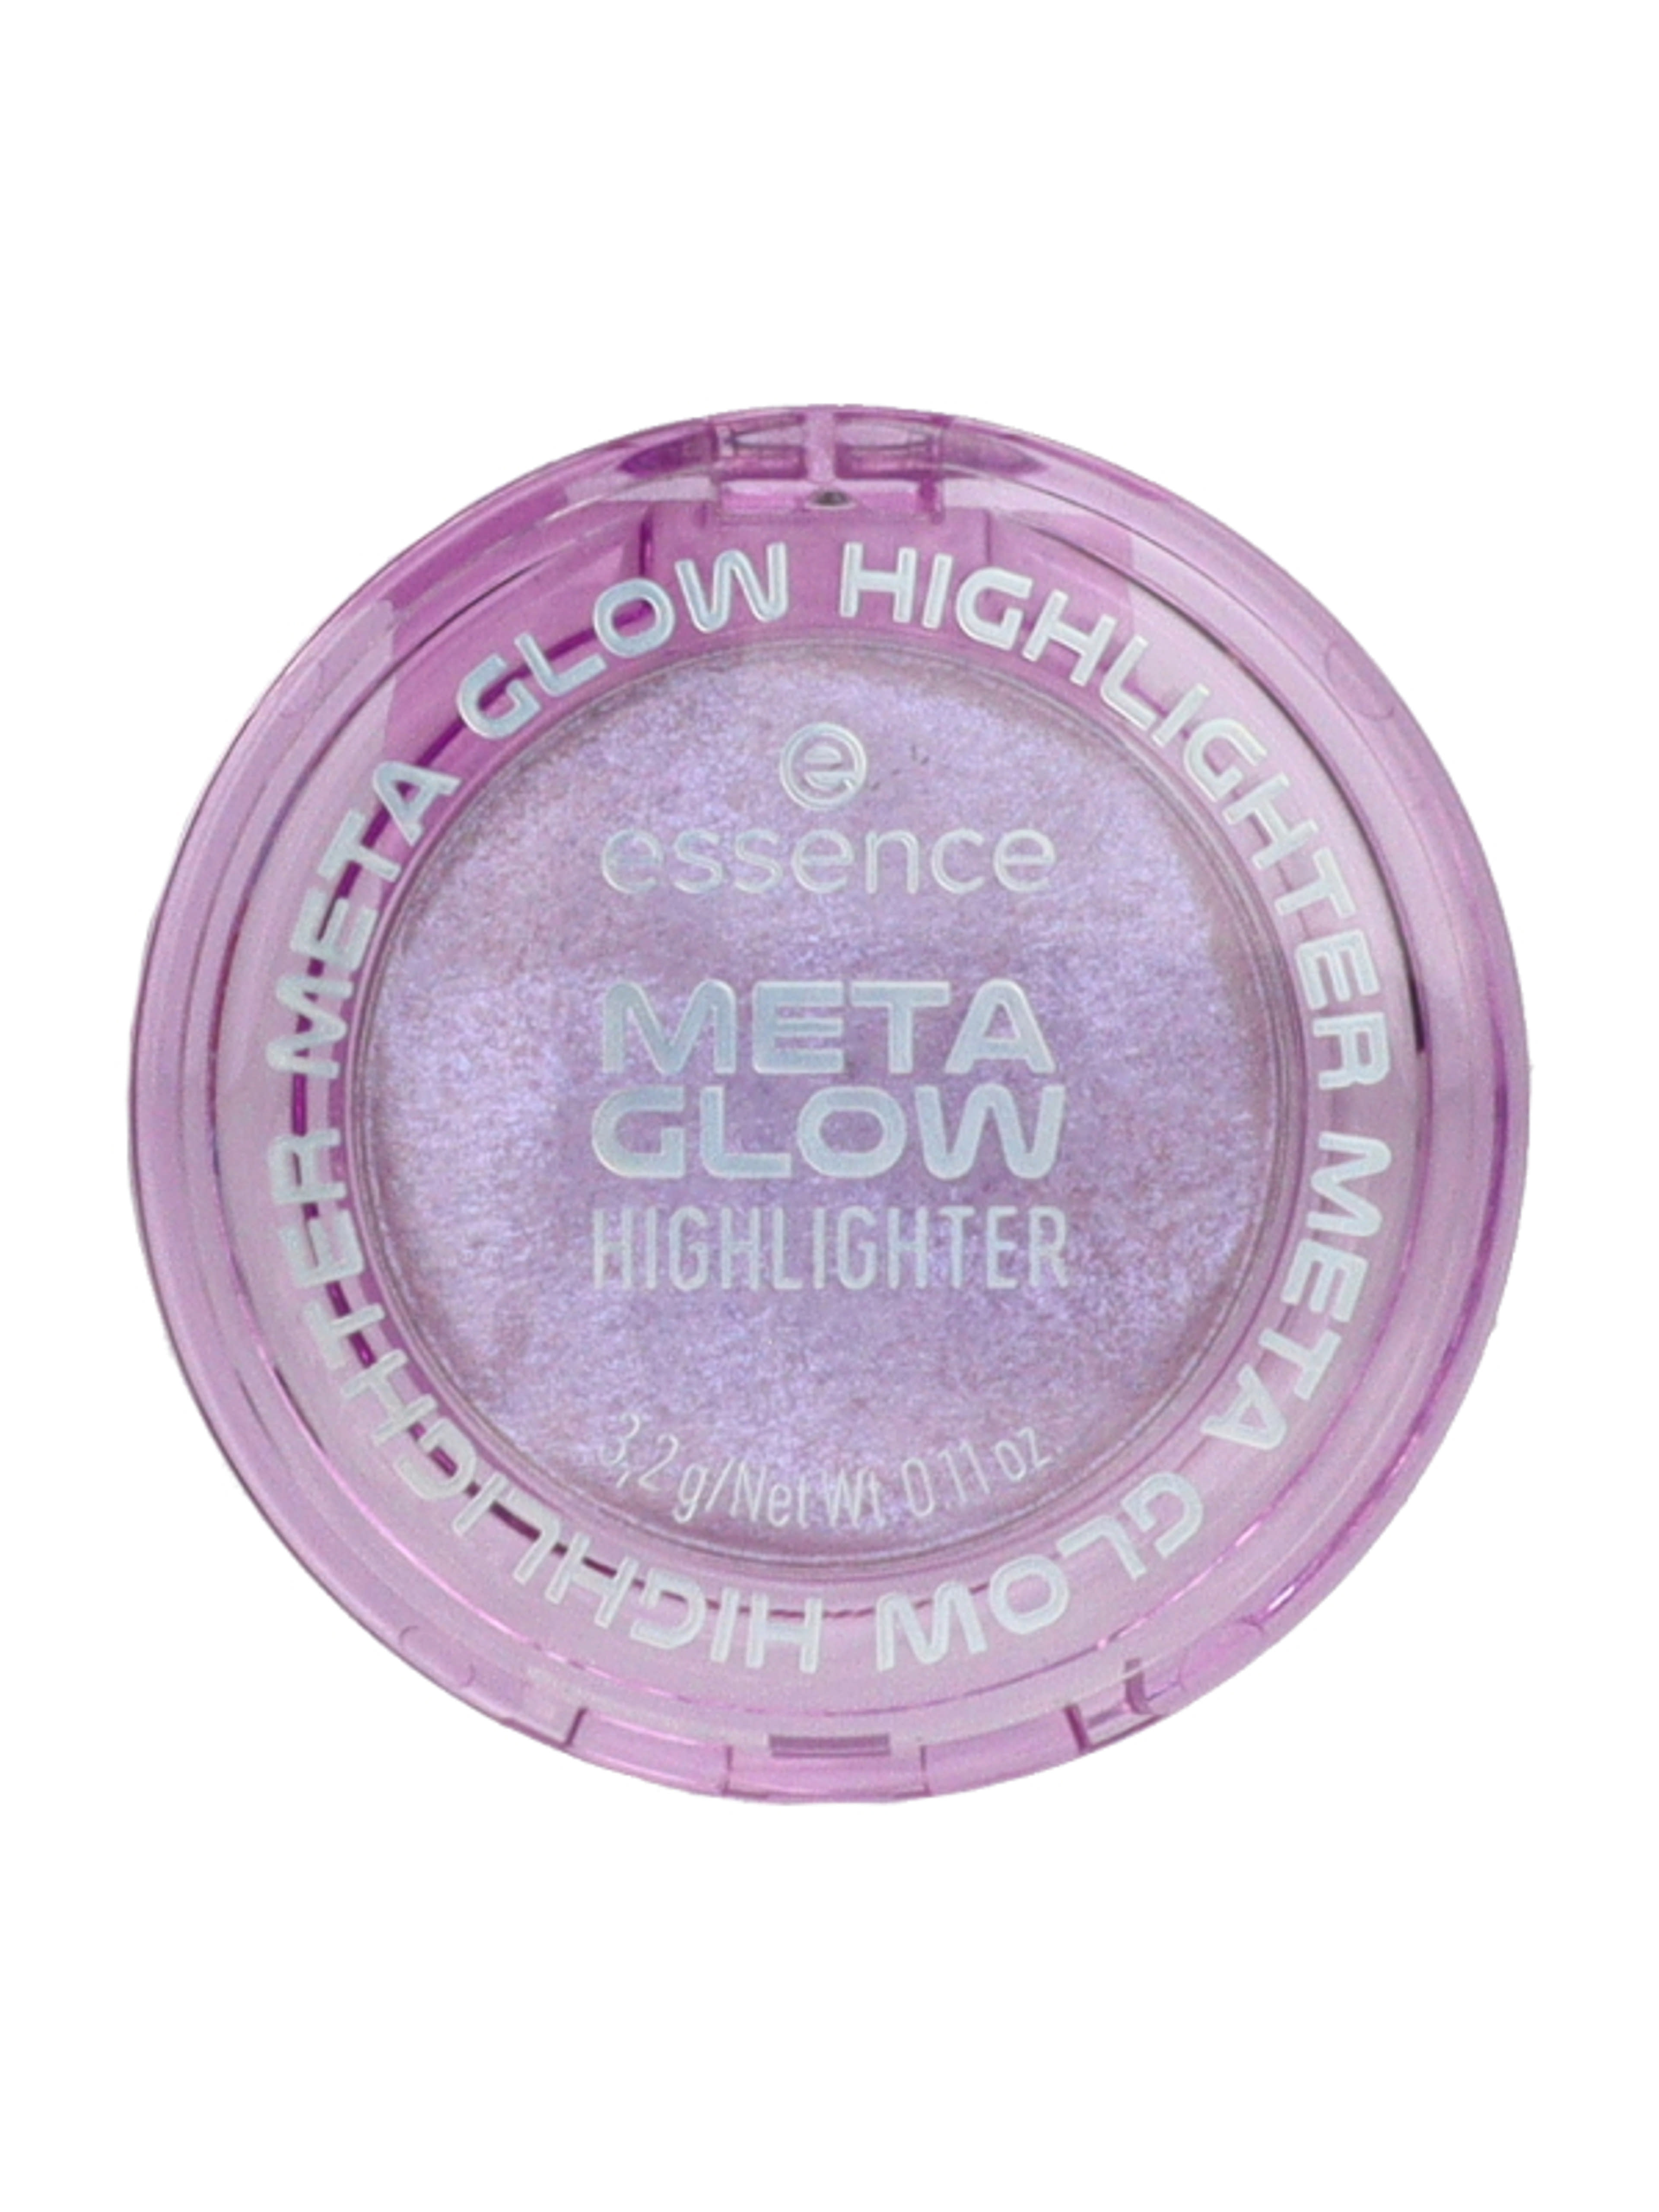 Essence Meta Glow highlighter - 1 db-1